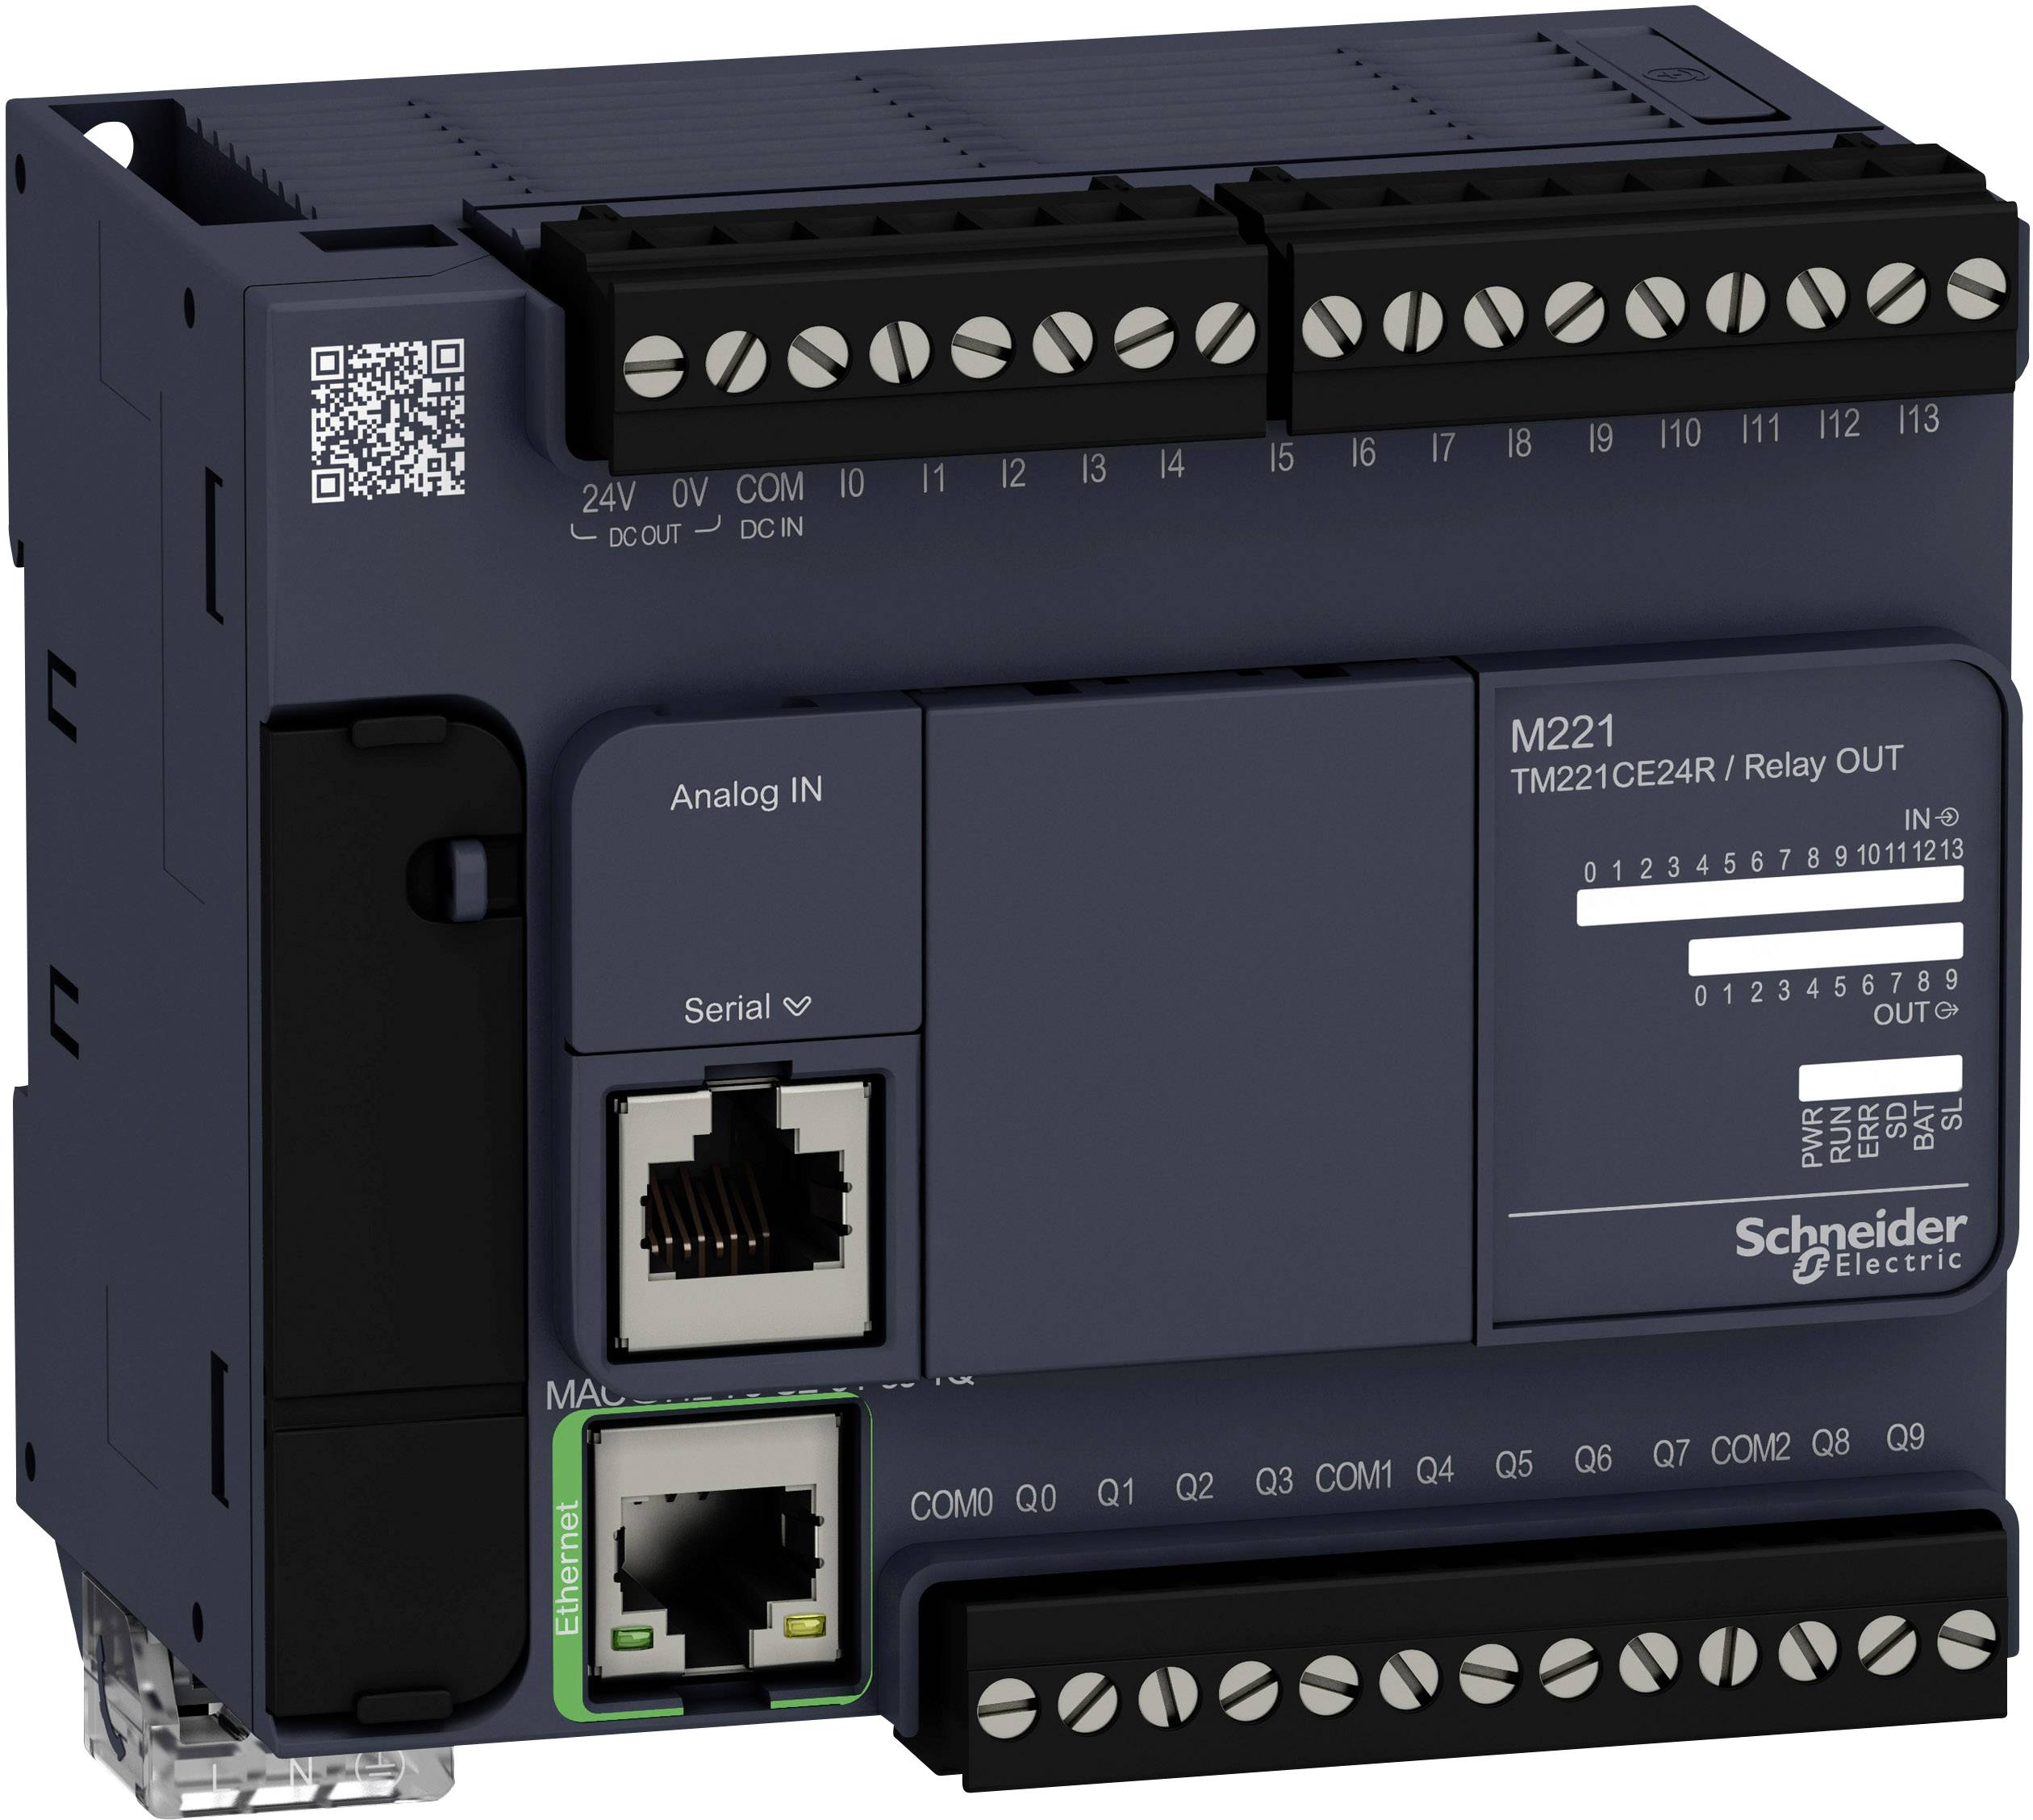 APC GS SPS-Steuerung M221C TM221CE24R Ethernet/seriell 2 analog Ein.14